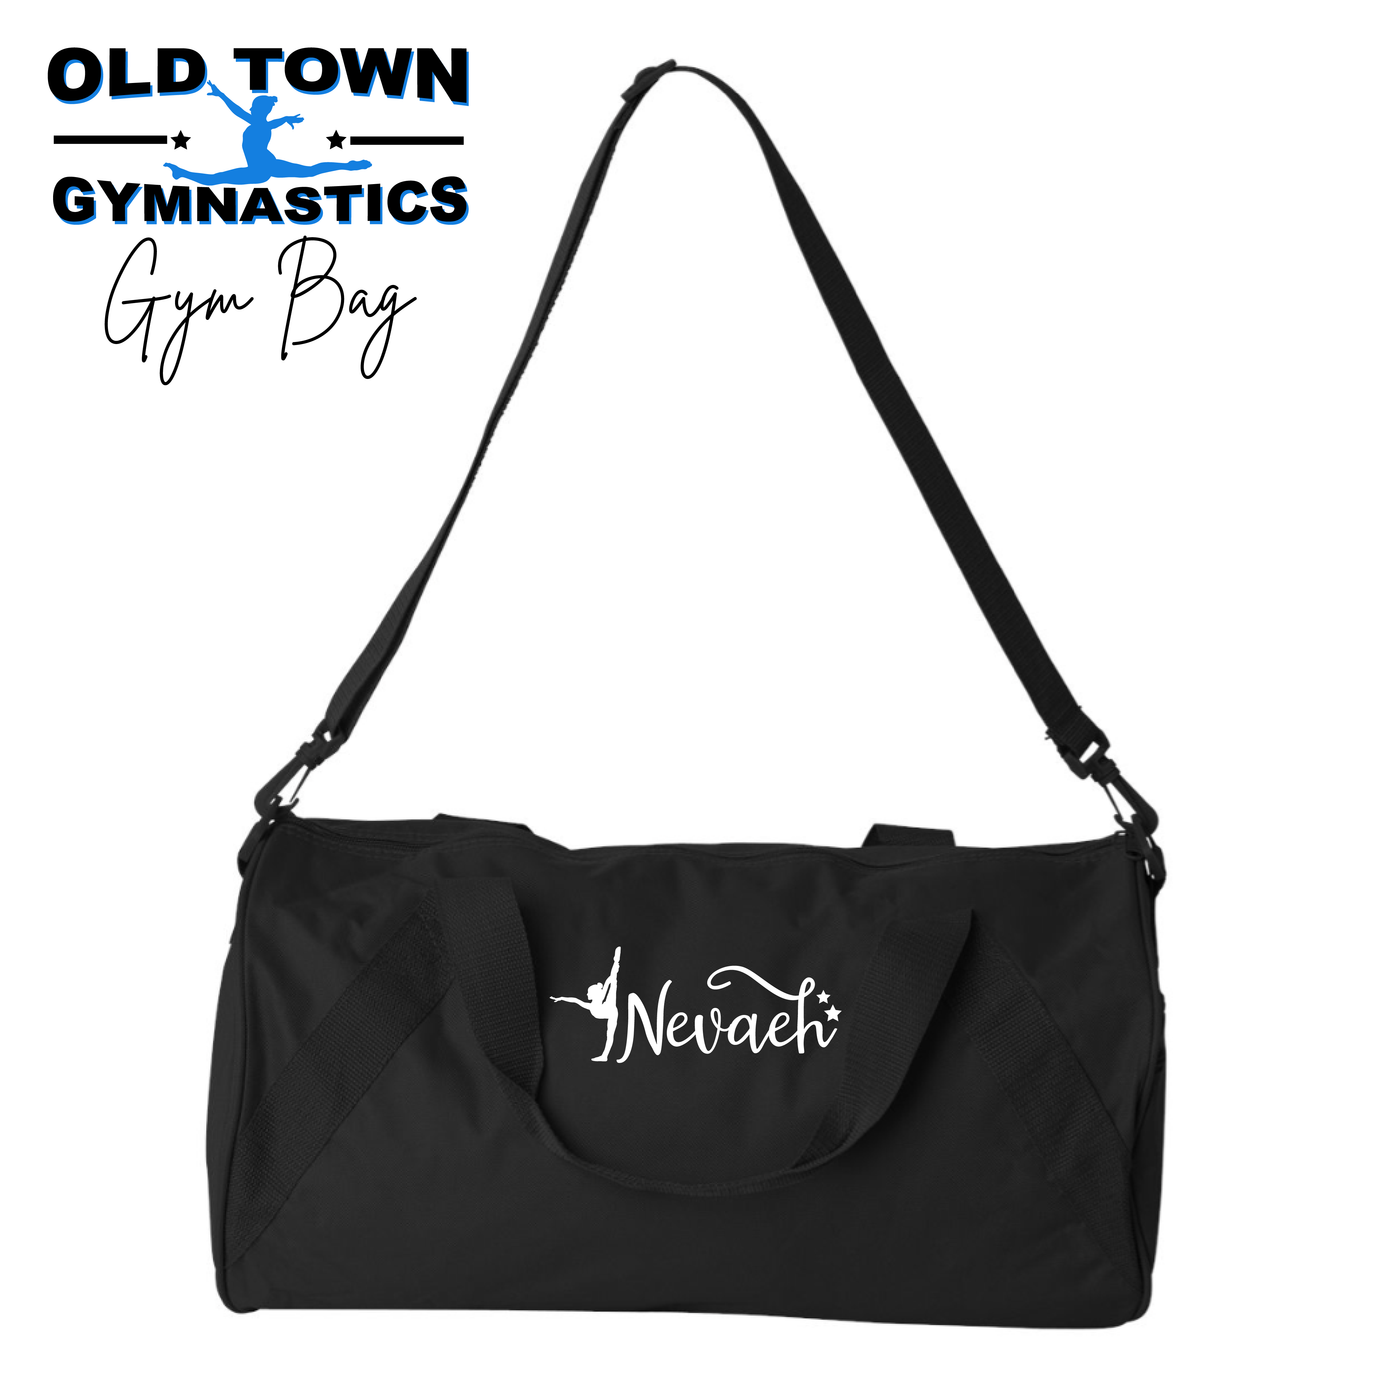 Monogram Old Town Gymnastics Duffle Bag